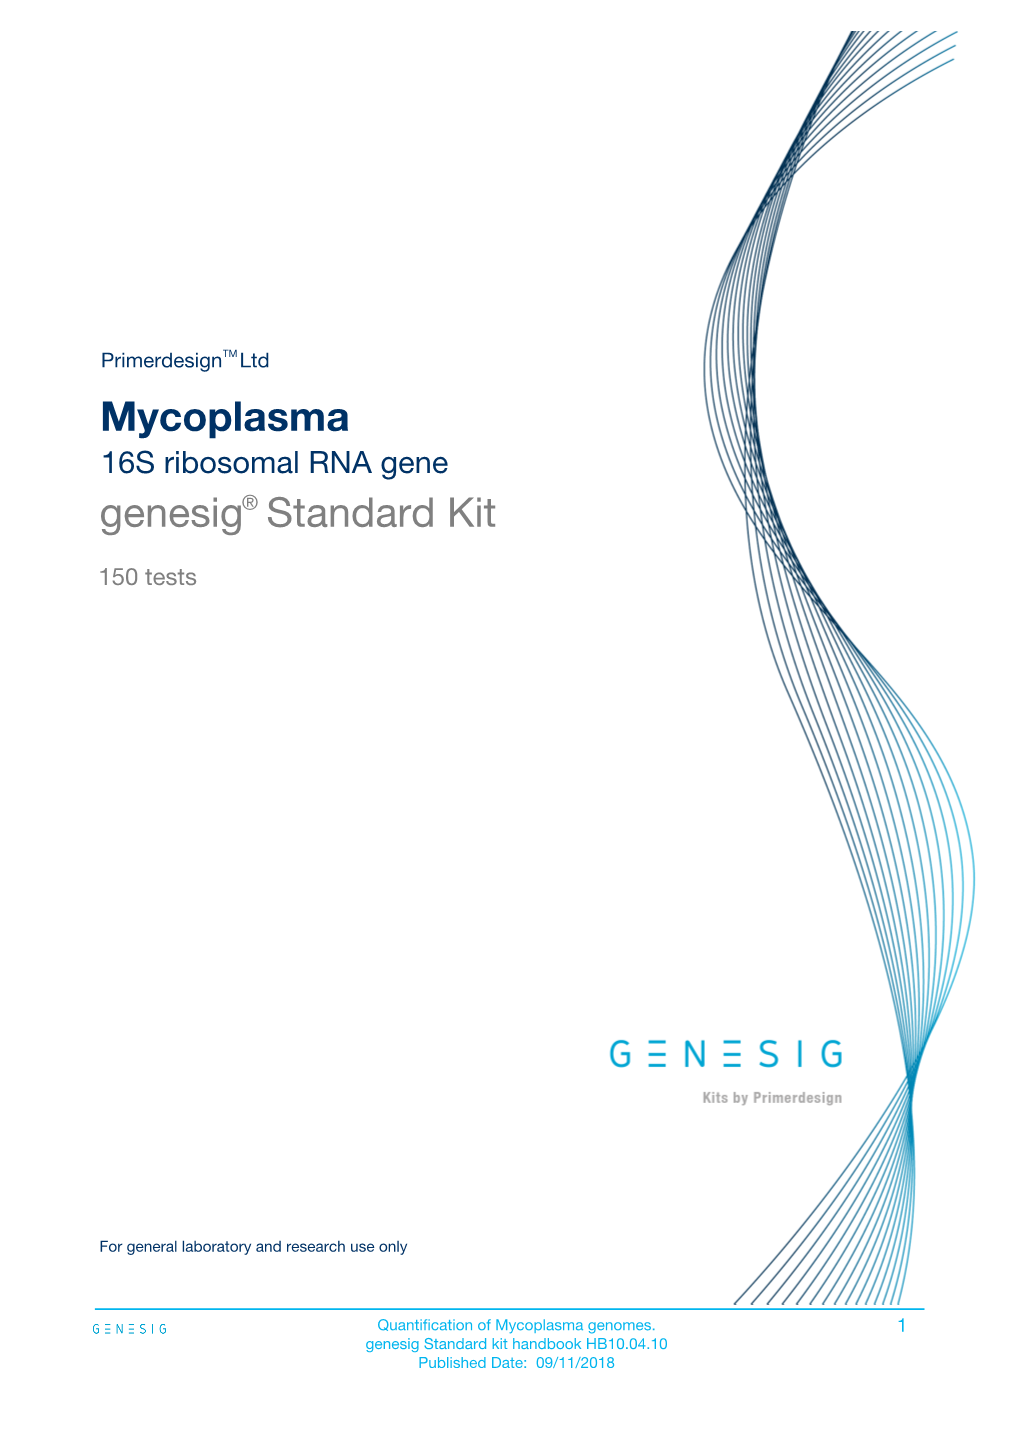 Mycoplasma Genesig Standard